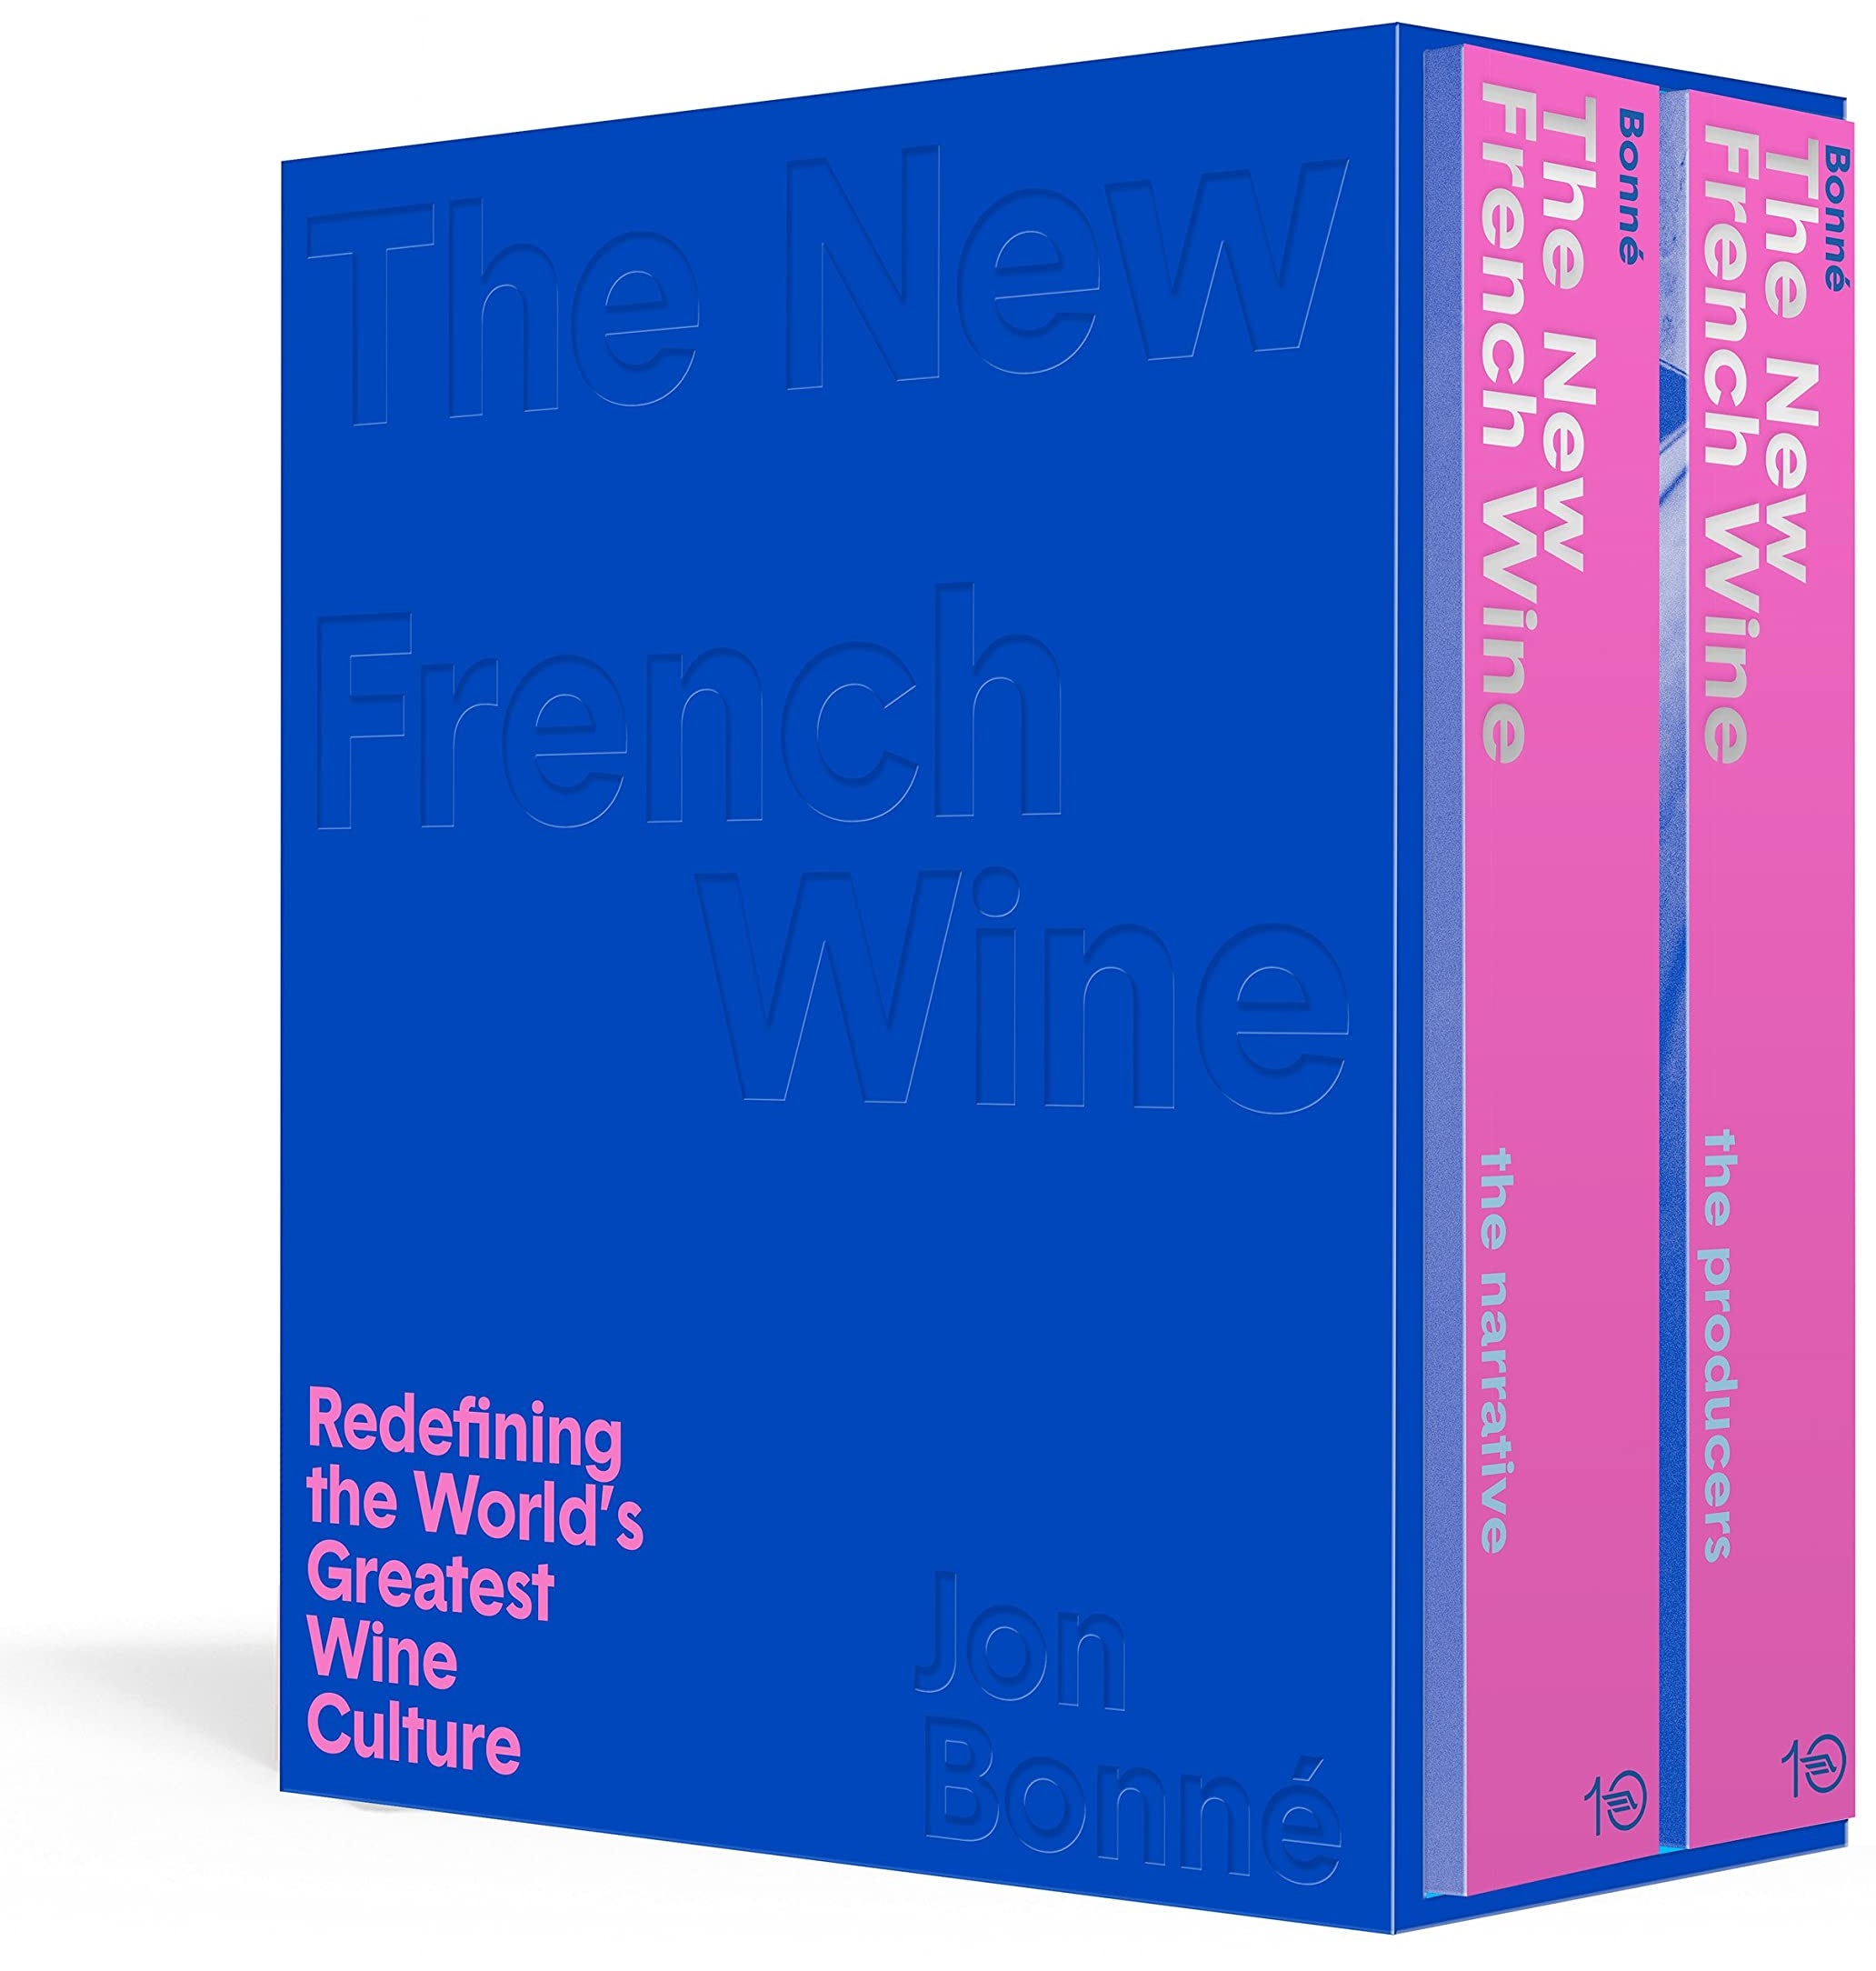 The New French Wine | Jon Bonne